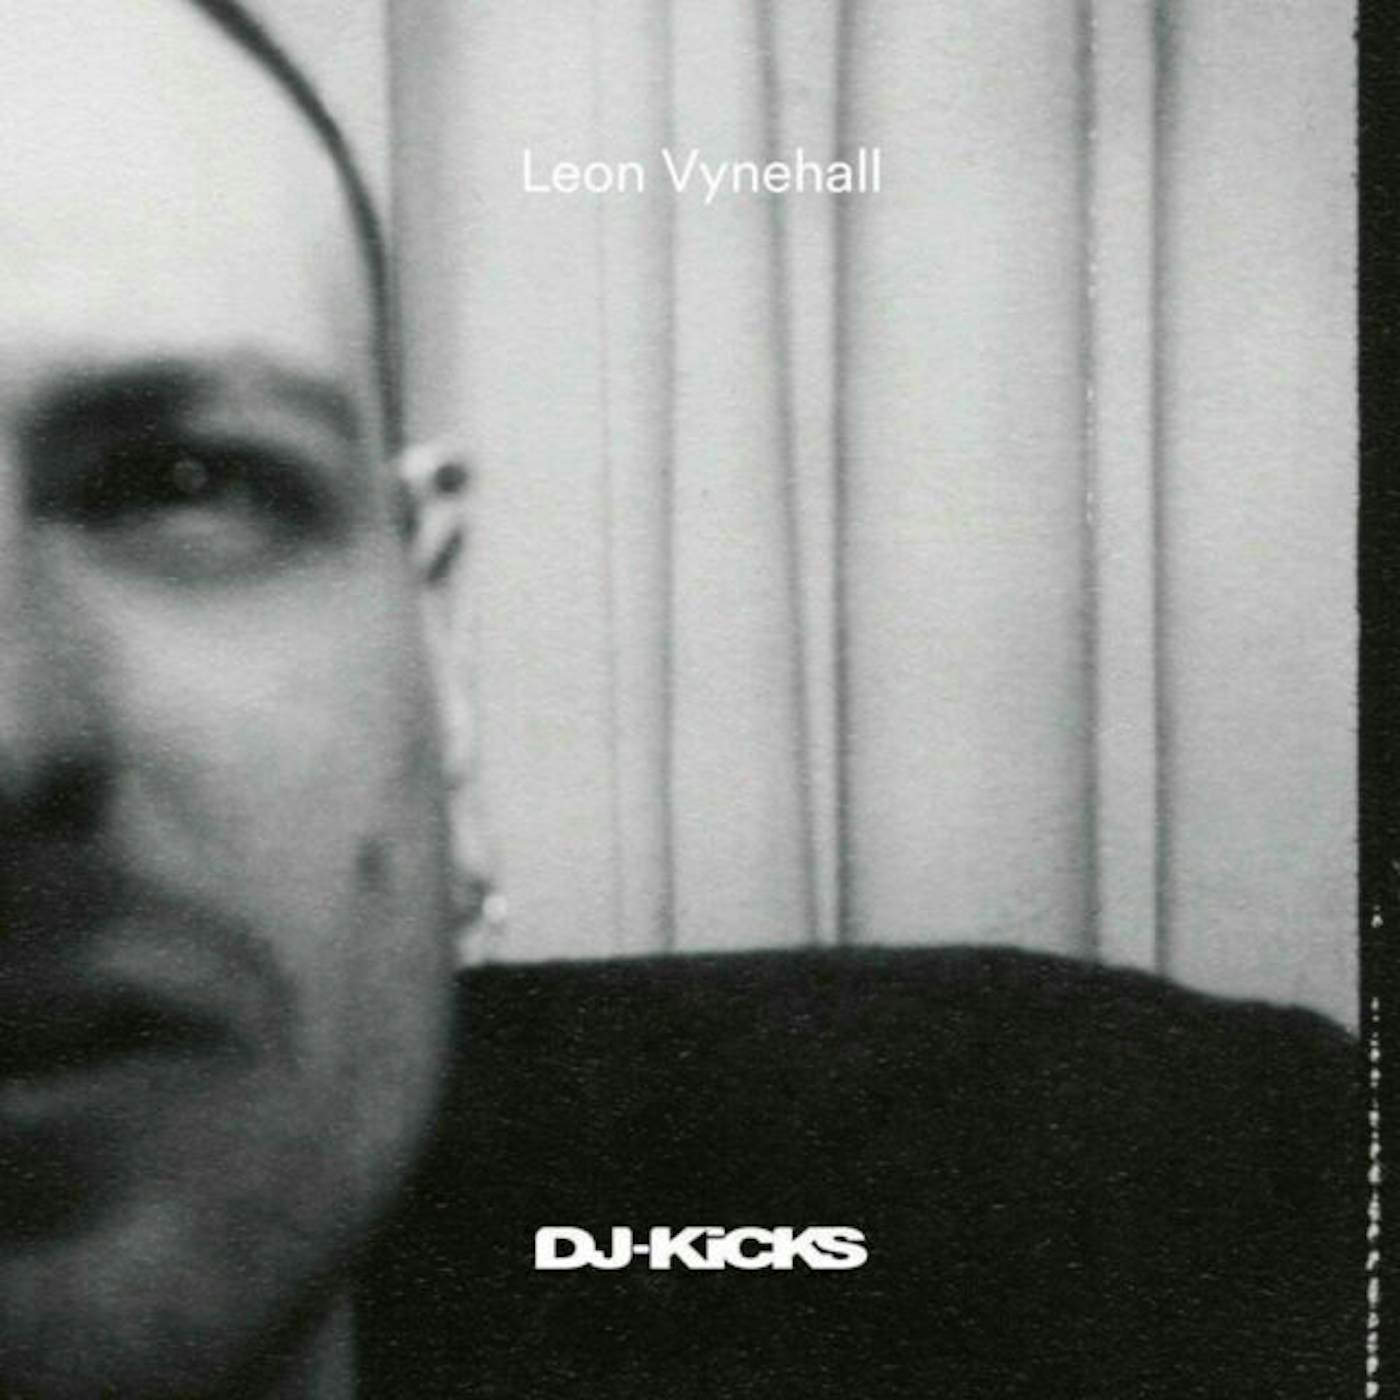 LEON VYNEHALL DJ-KICKS Vinyl Record